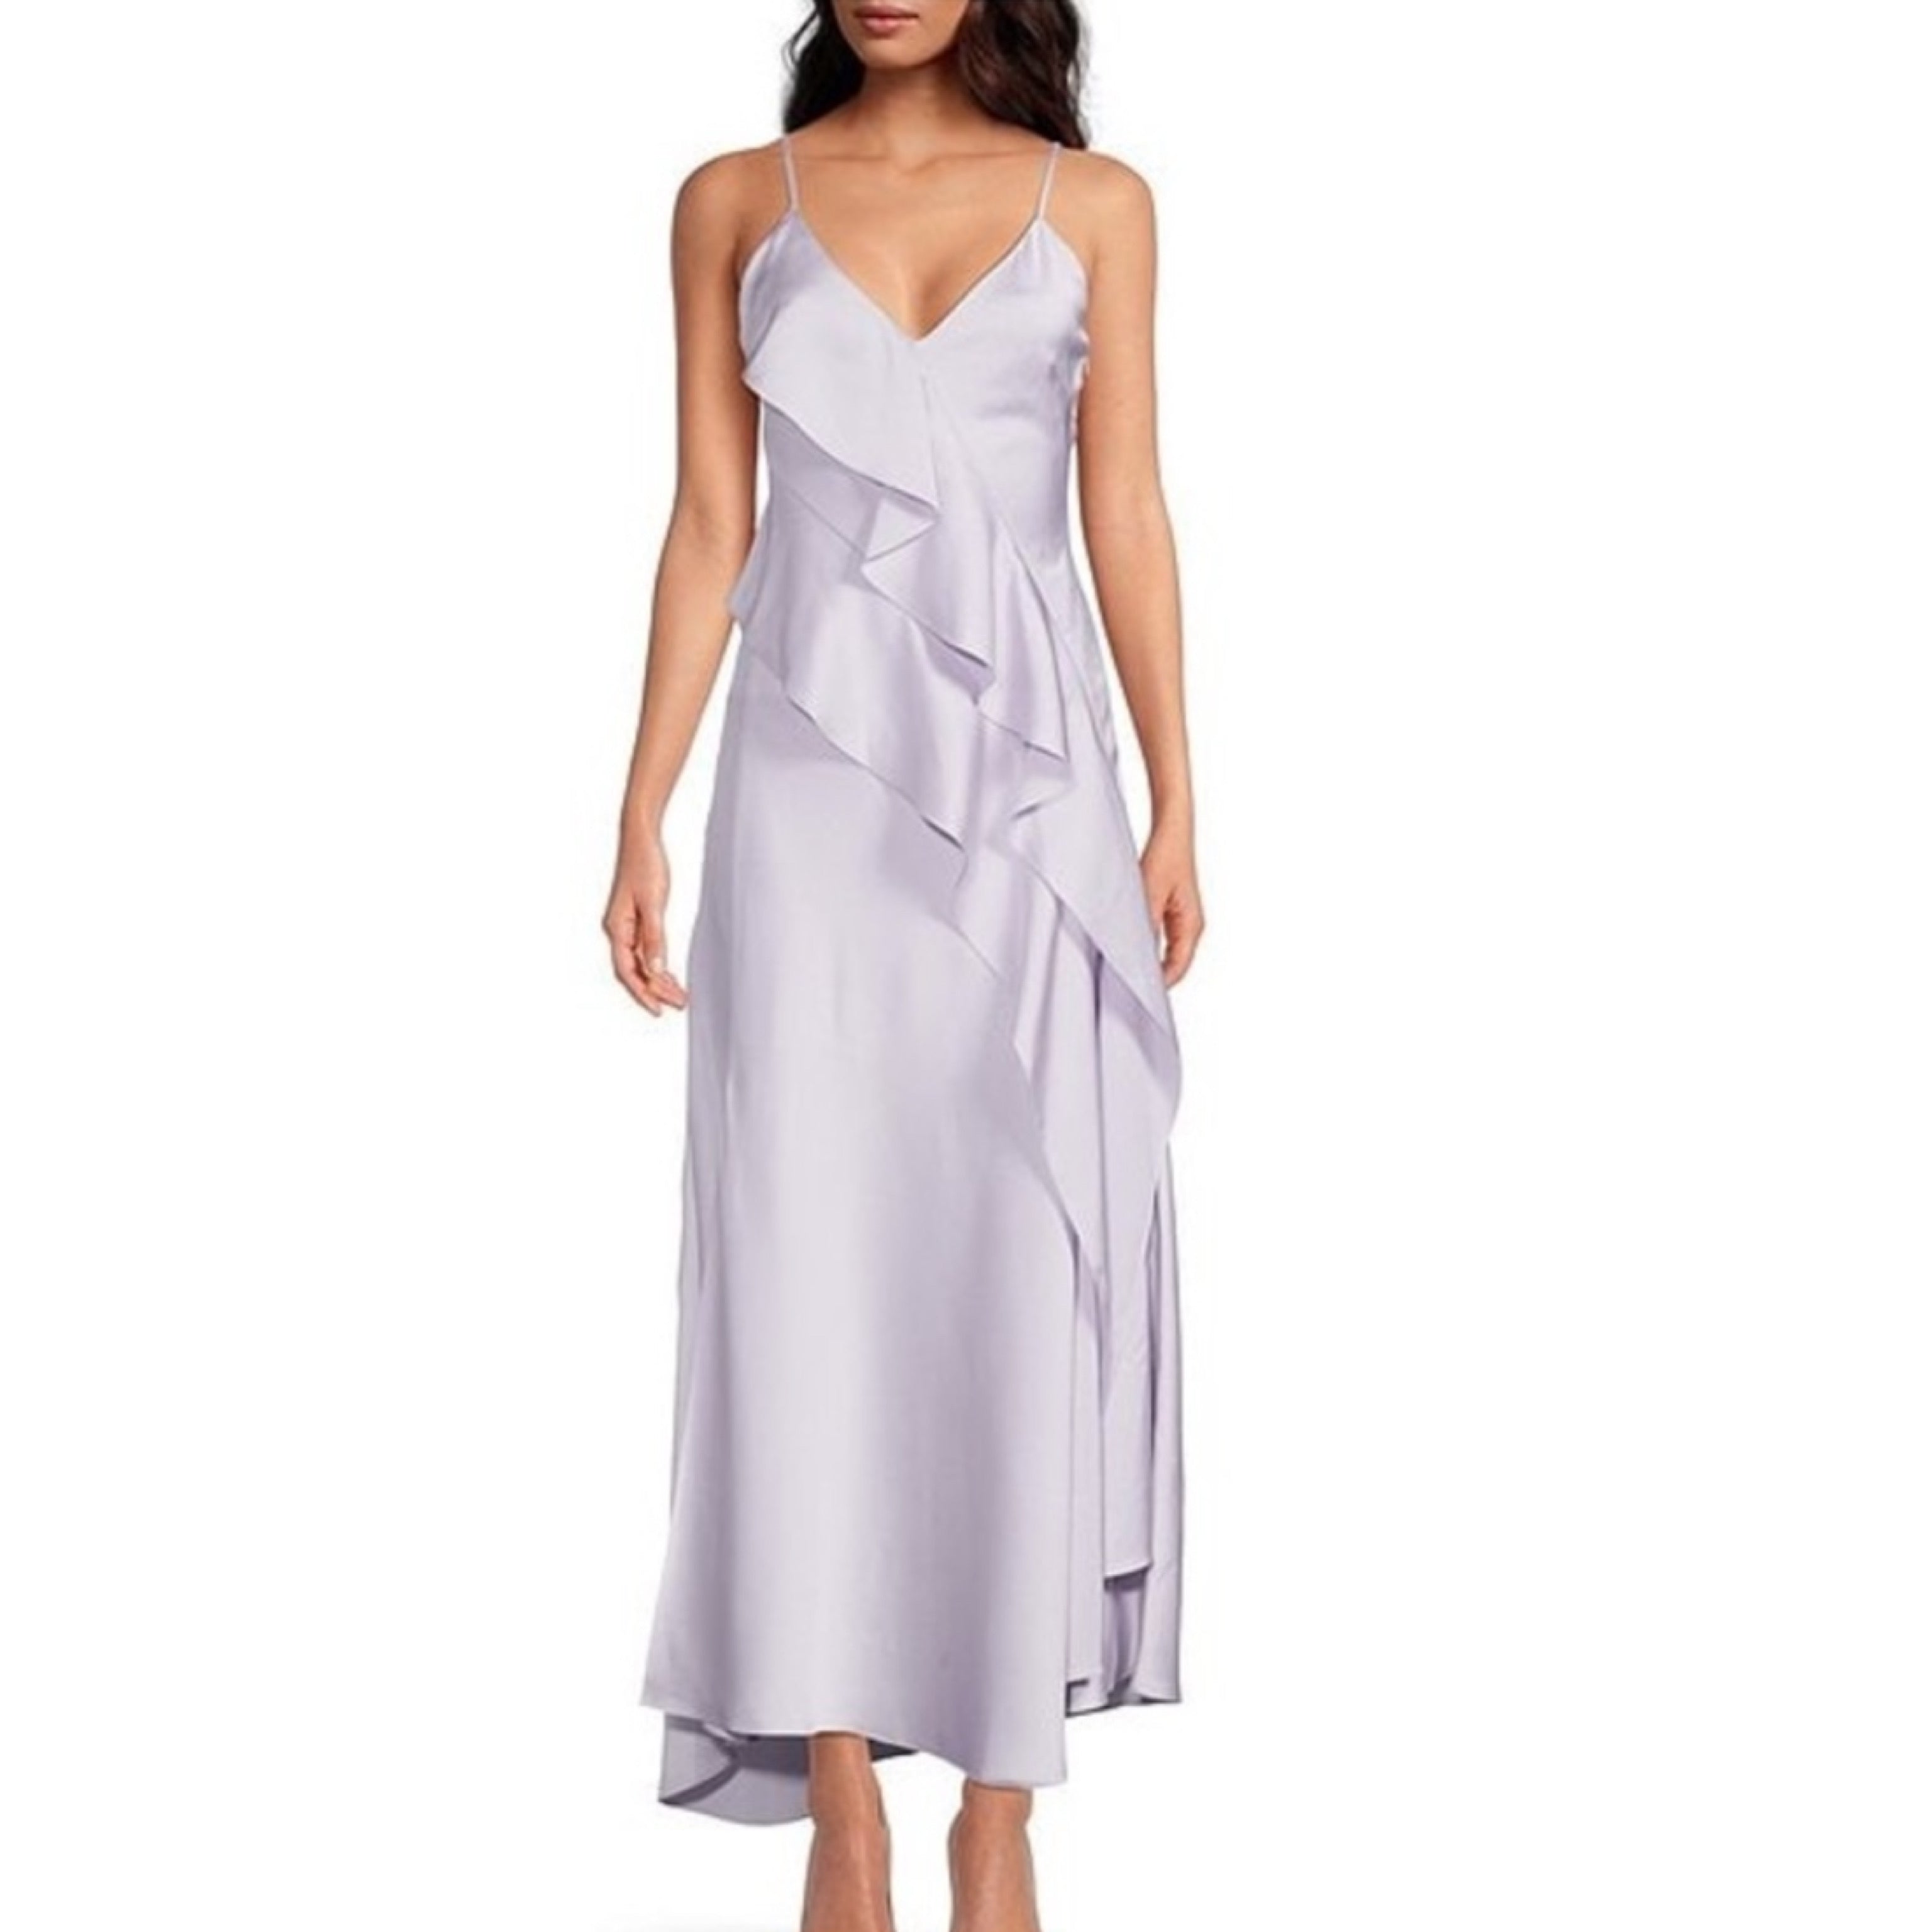 Gianni Bini lavender dress, size 0, NEW W/O TAGS!